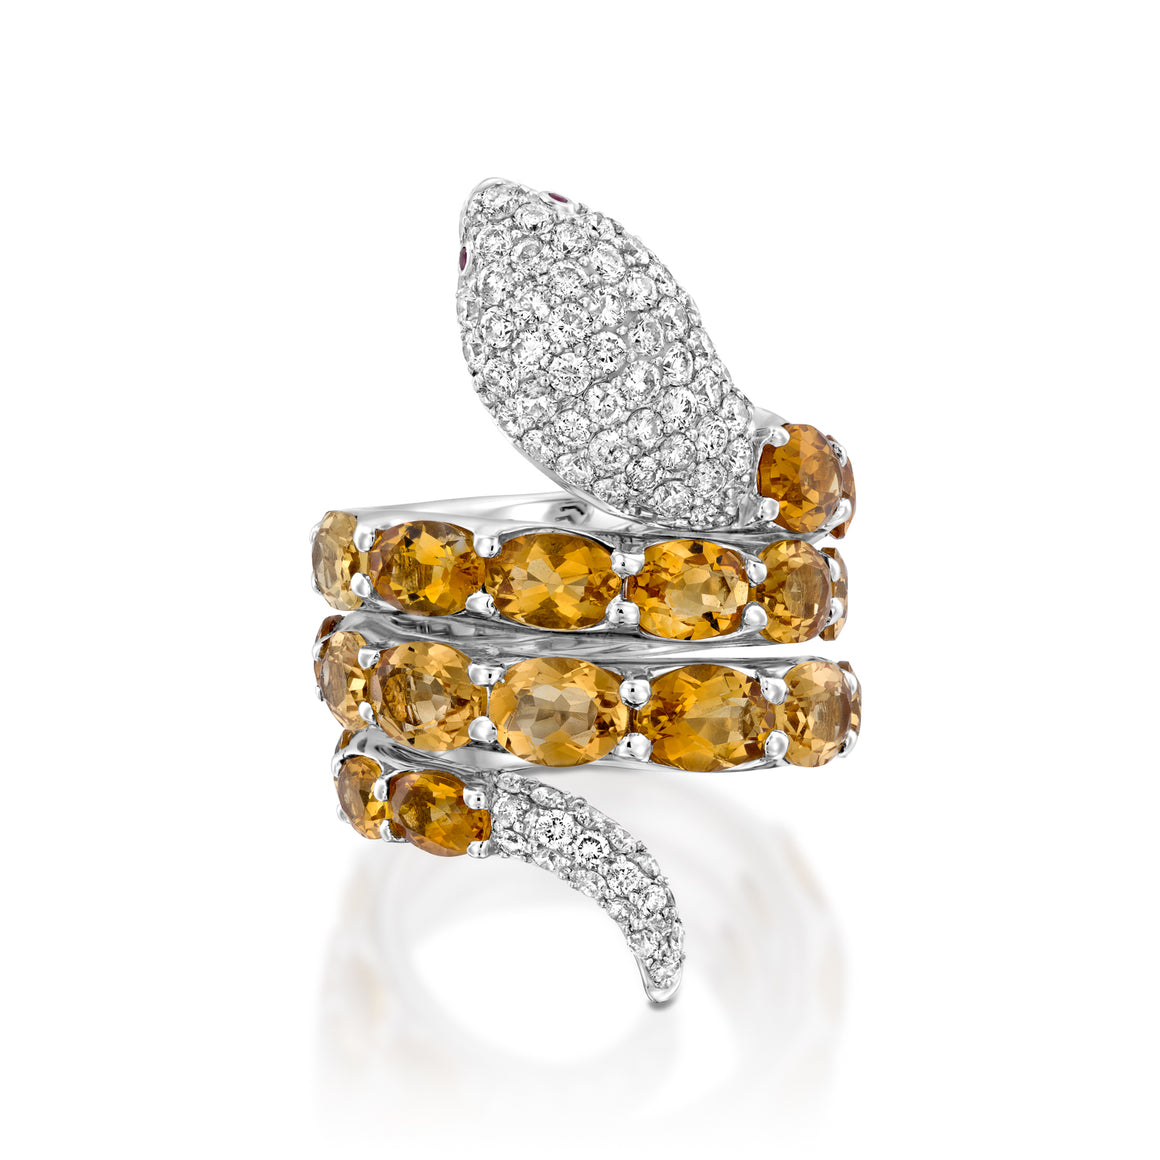 RNAT86619-White gold and citrine gemstone snake ring